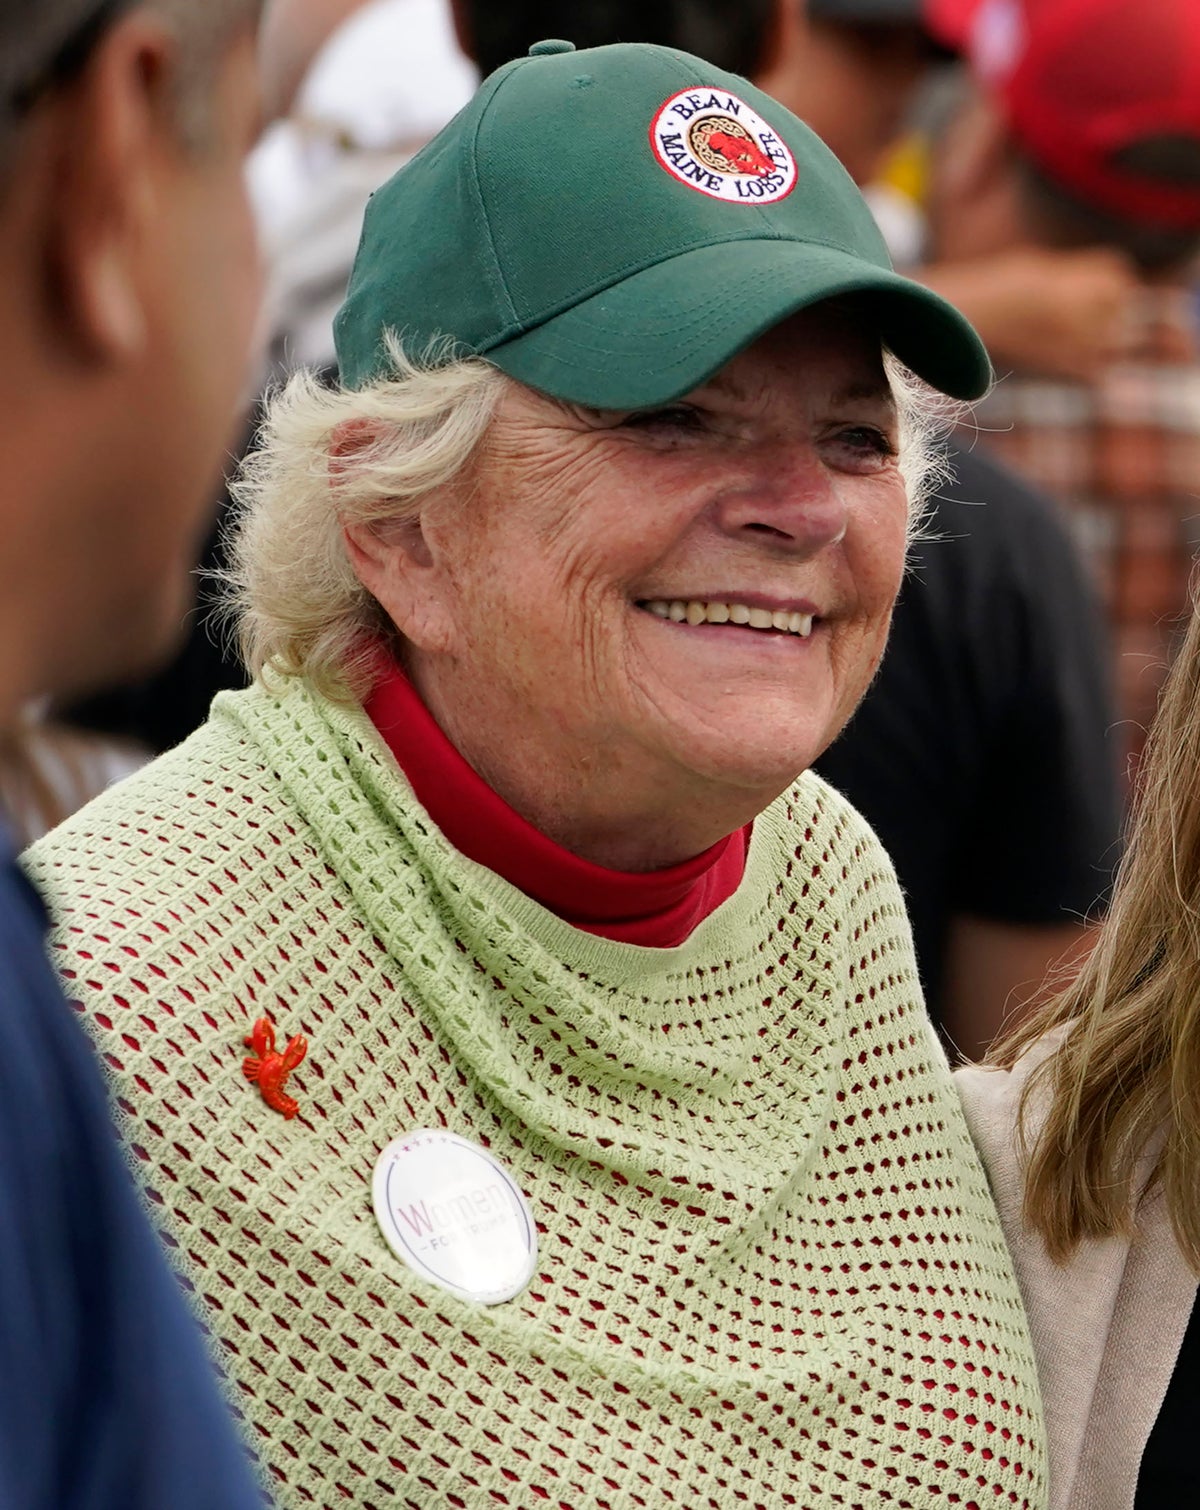 Linda Bean, an entrepreneur, GOP activist and granddaughter of outdoor retailer LL Bean, has died